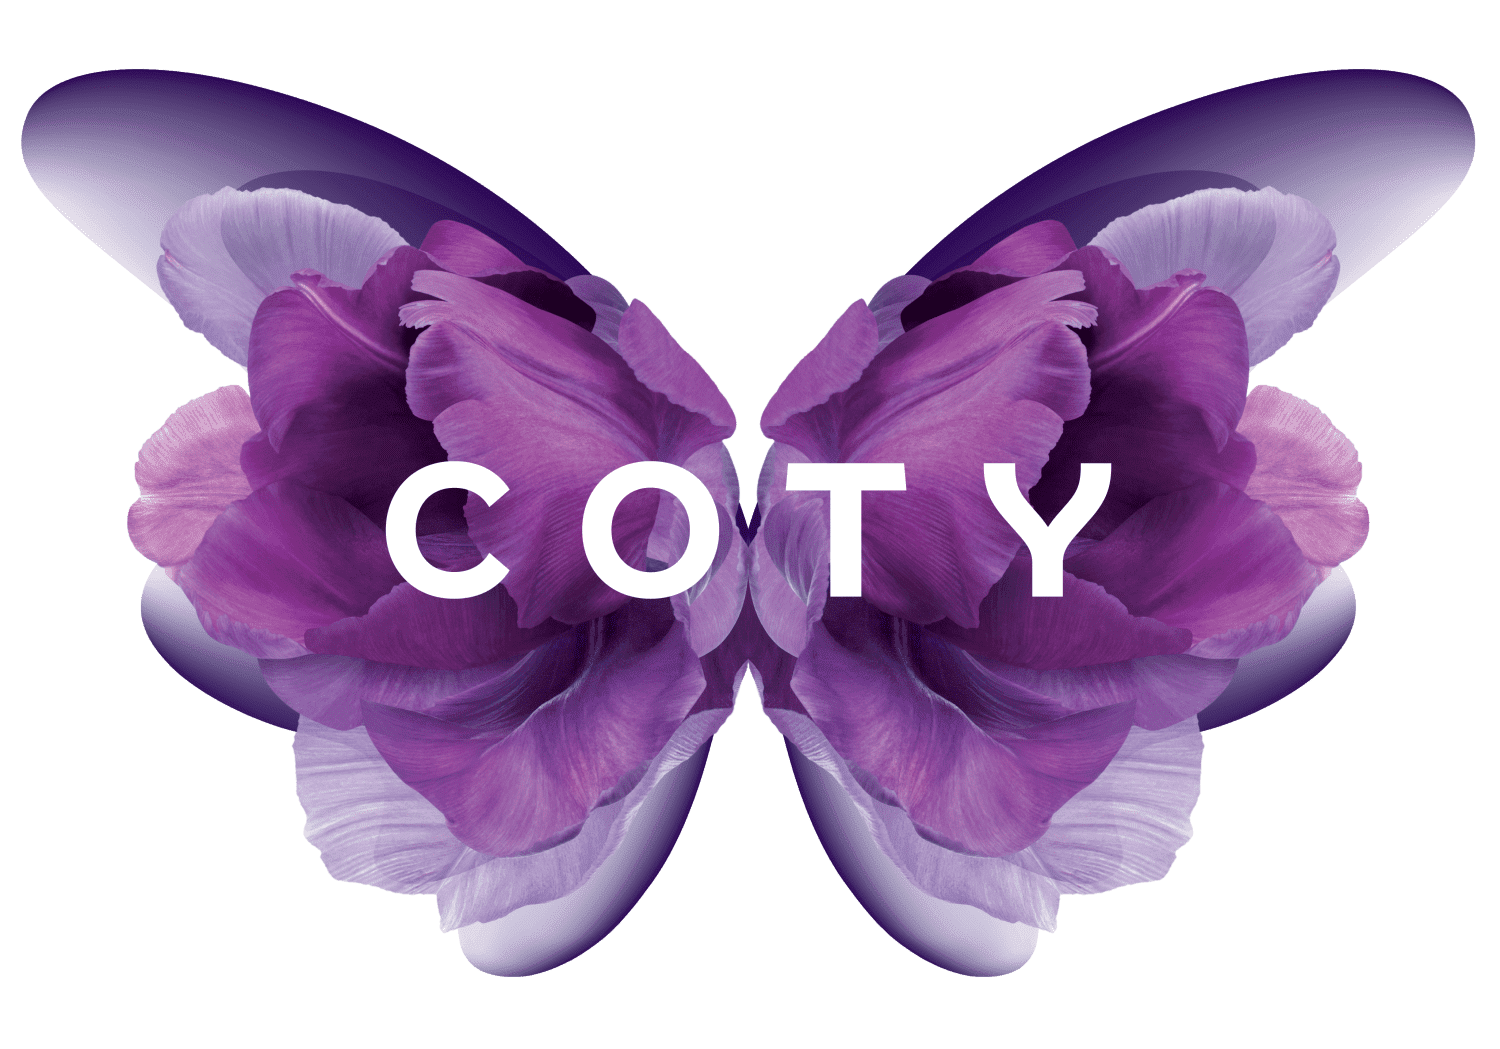 coty butterfly Hypervsn hologram event advertising digital signage